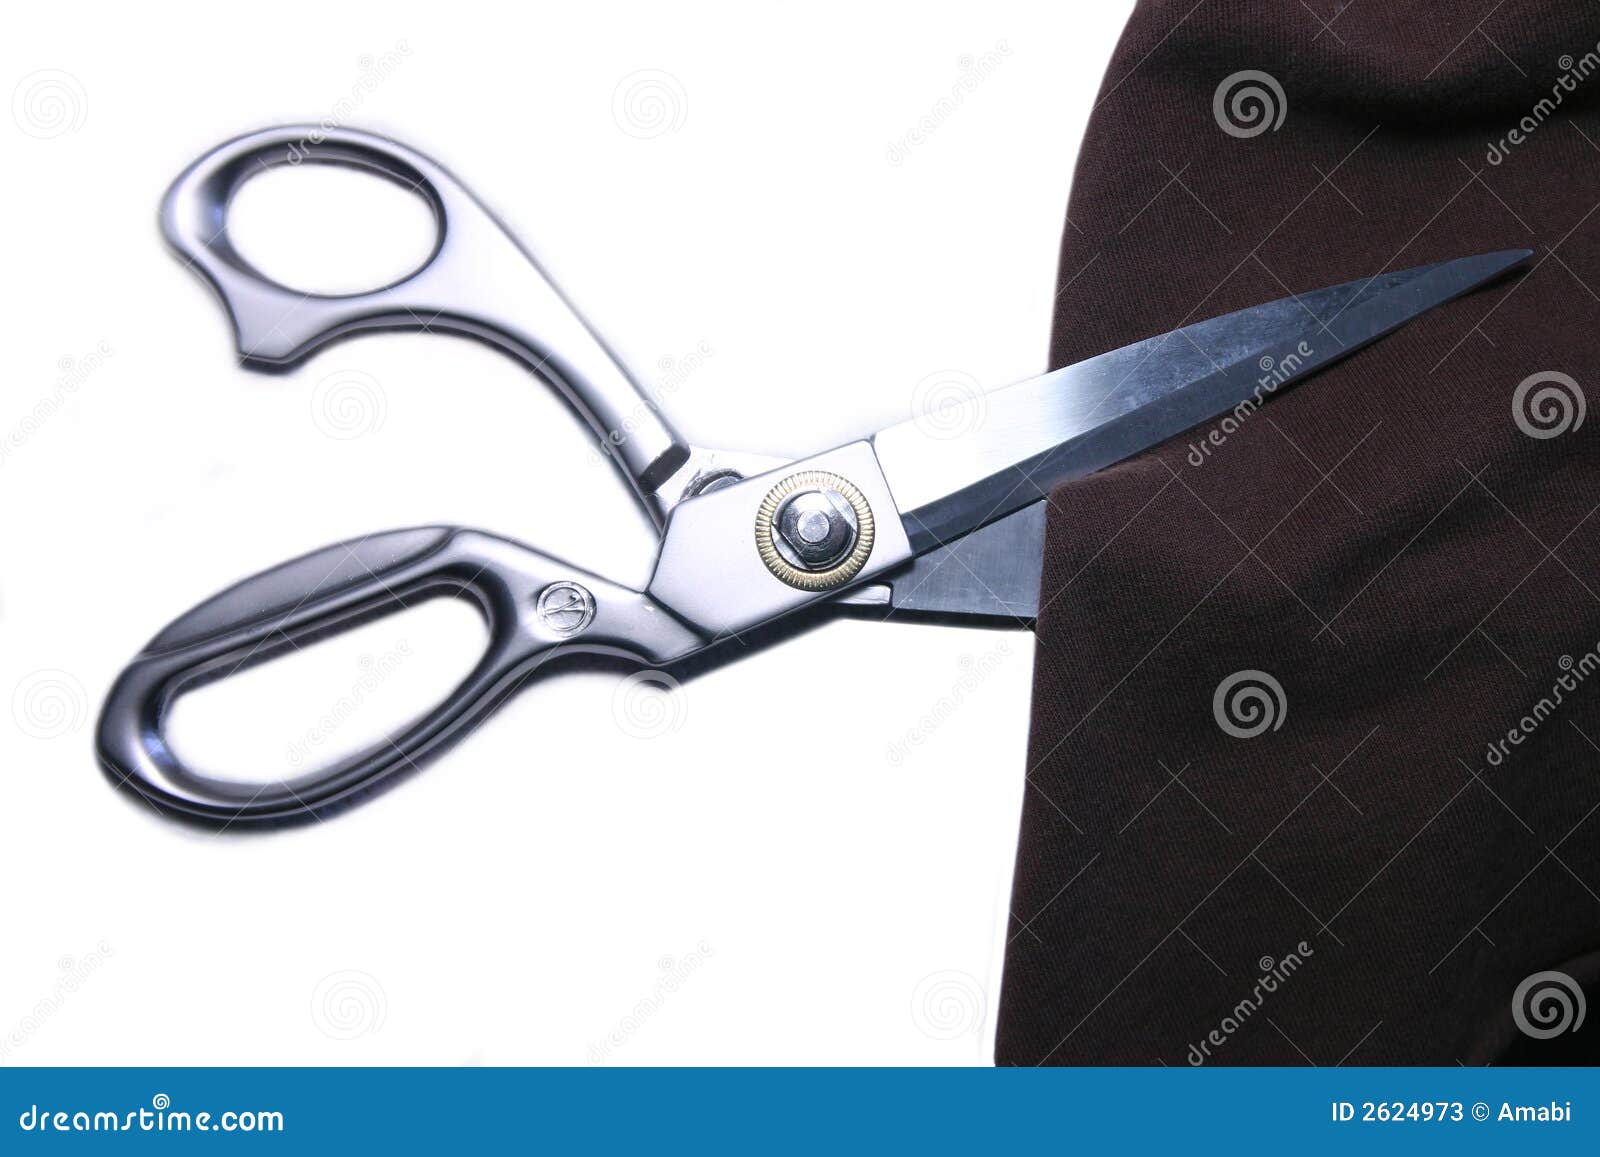 taylor scissors